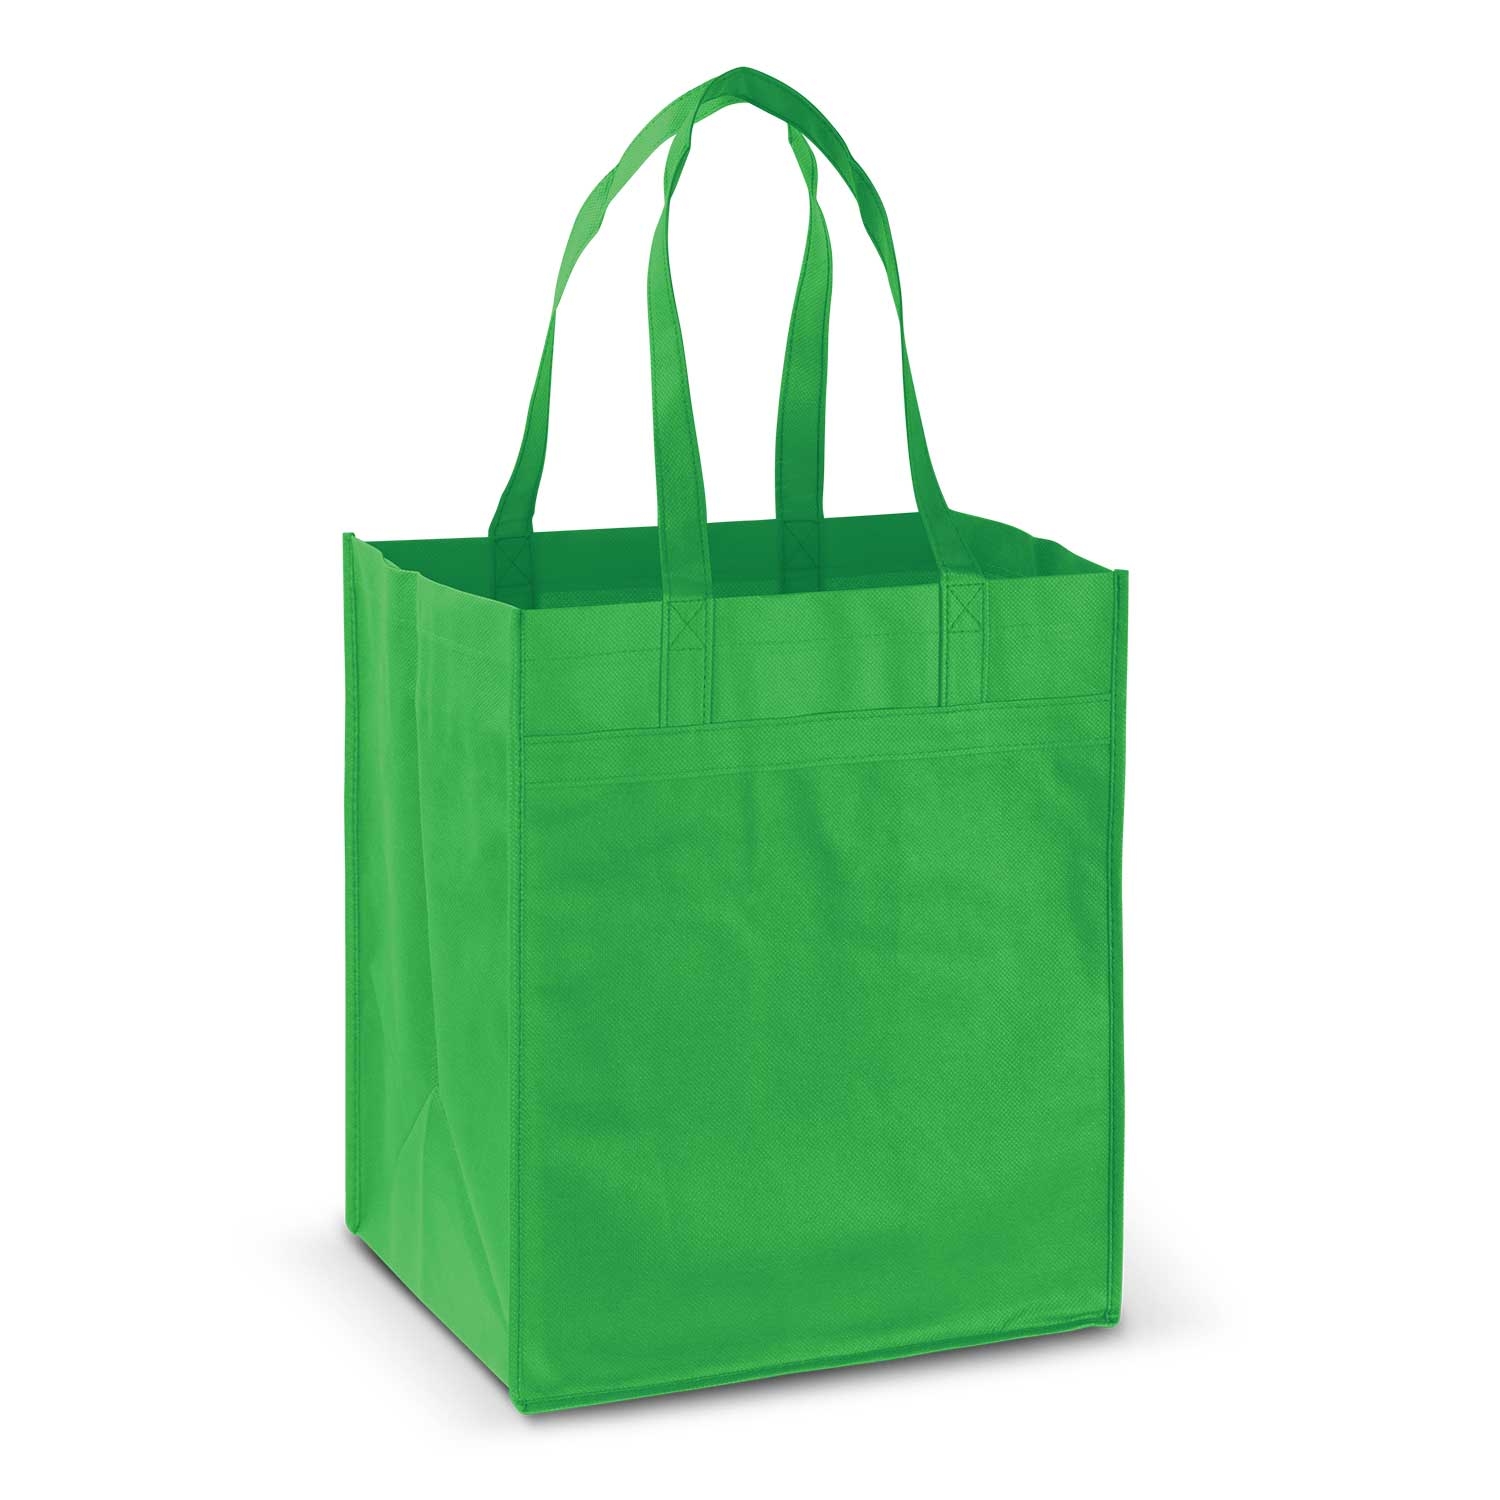 Mega Shopper Tote Bag - Image Group